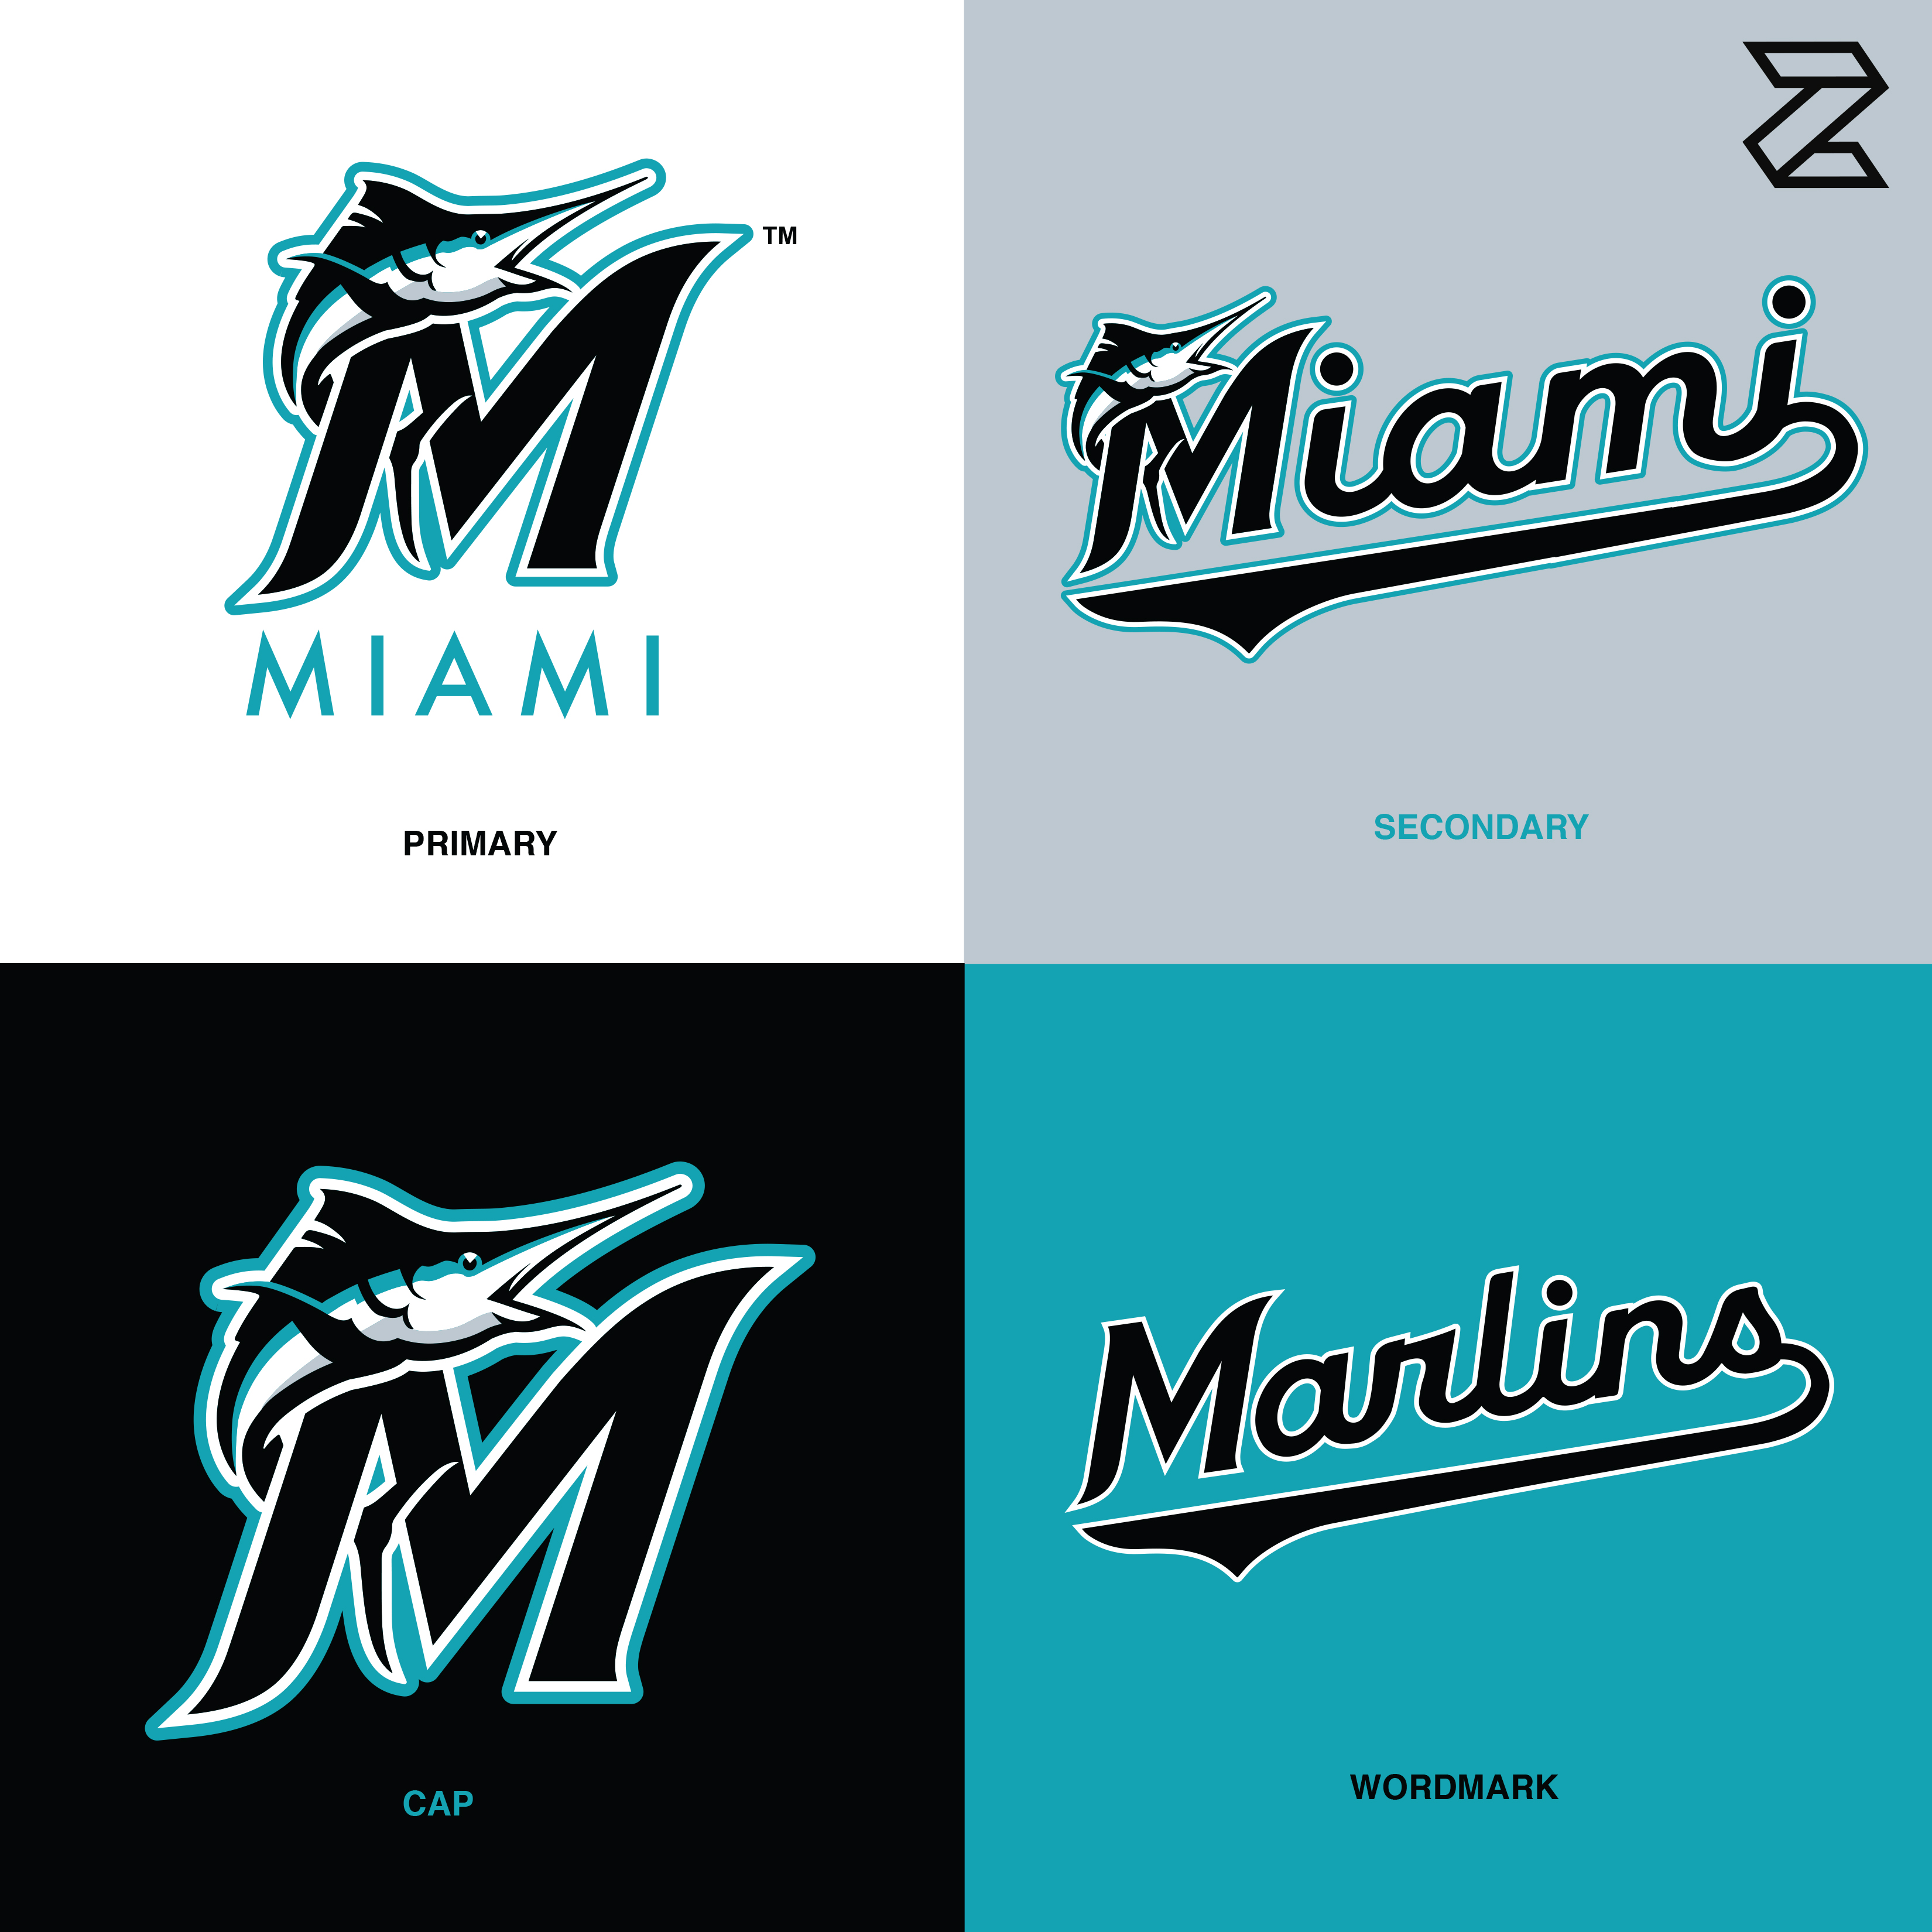 Zizzo Printing on X: Miami Marlins Concept/Tweak @zizzoprinting @Marlins  @sportslogosnet @sbnation @mlb #hatclub #marlins #mlb #baseball #miami  #miamimarlins #florida #juntosmiami #sports #marlinsbaseball #marlinspark  #letsgofish #majorleaguebaseball